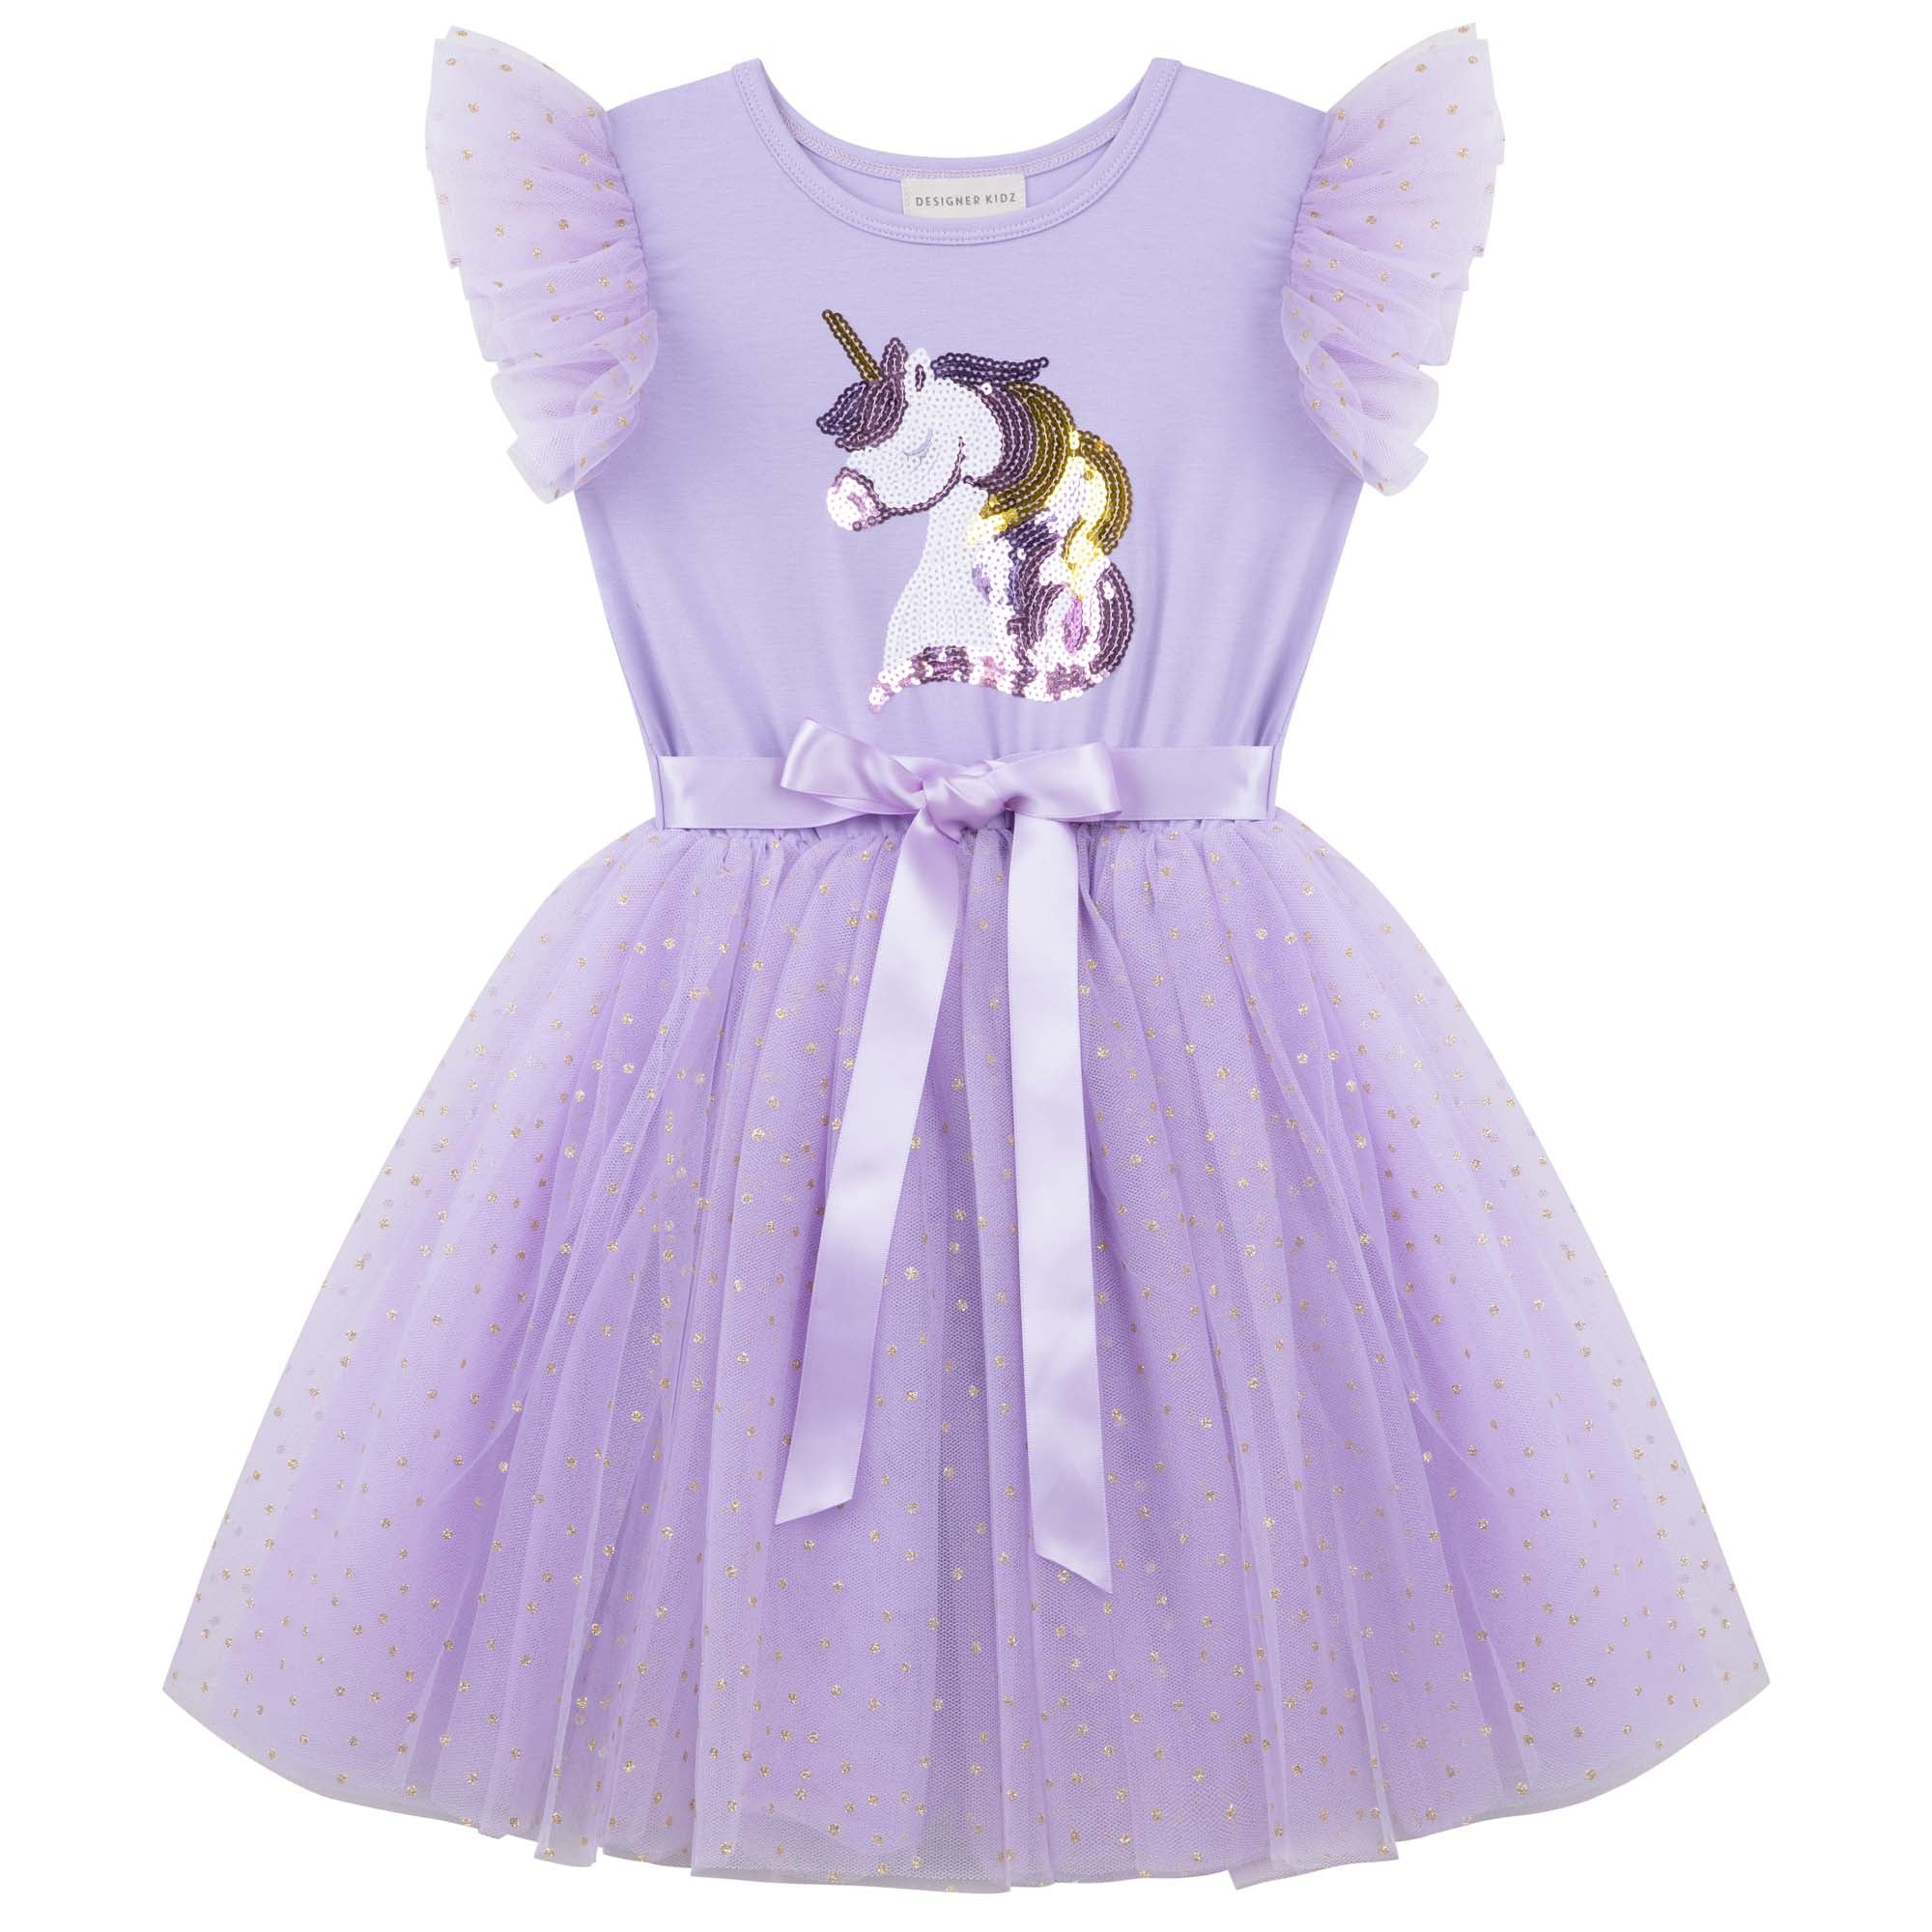 Unicorn Sequin S/S Tutu Dress - Lavender